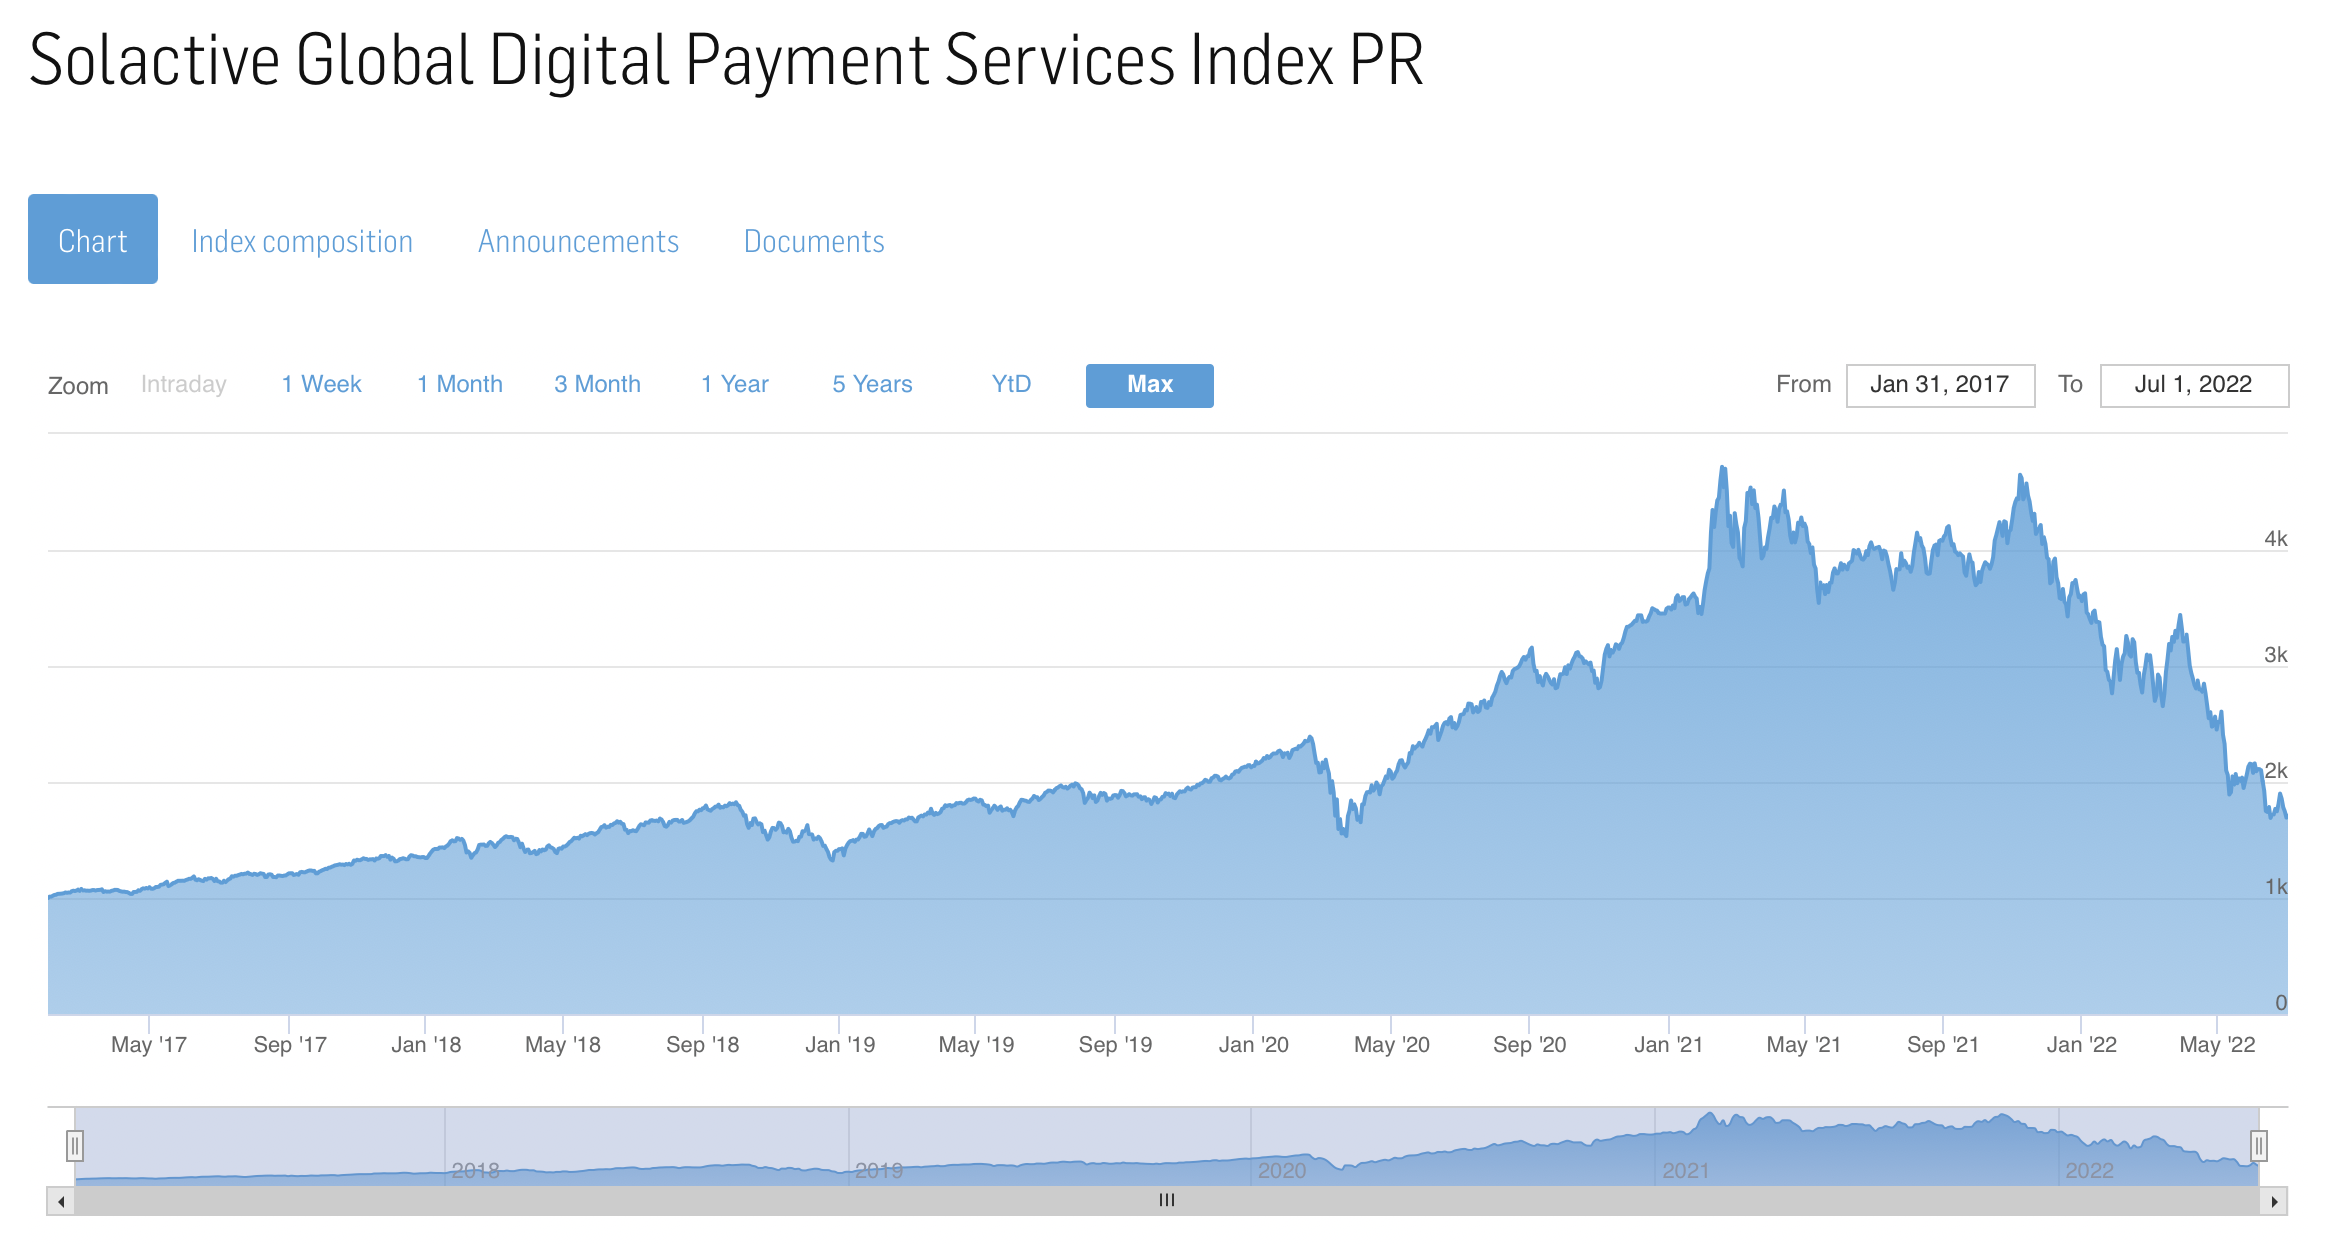 Solactive Global Digital Payment Services Index PR 成立以來走勢，擷取自官網，2022.7.2